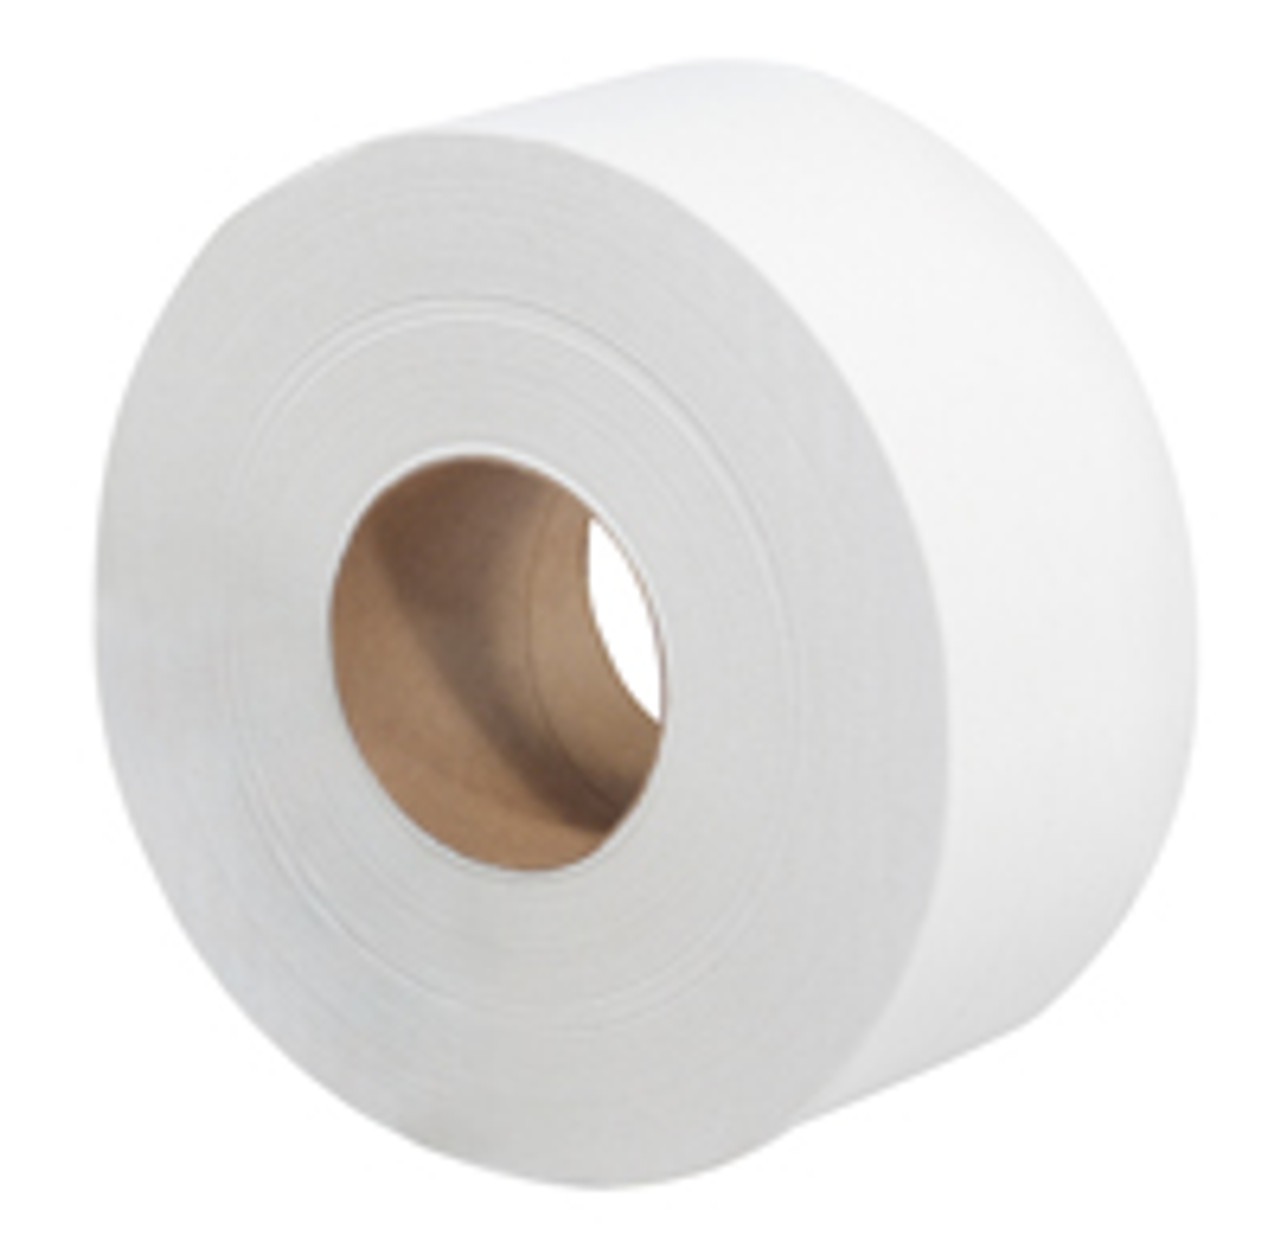 Bathroom Tissue - Jumbo Roll (2-Ply) (Qty) 12 Rolls